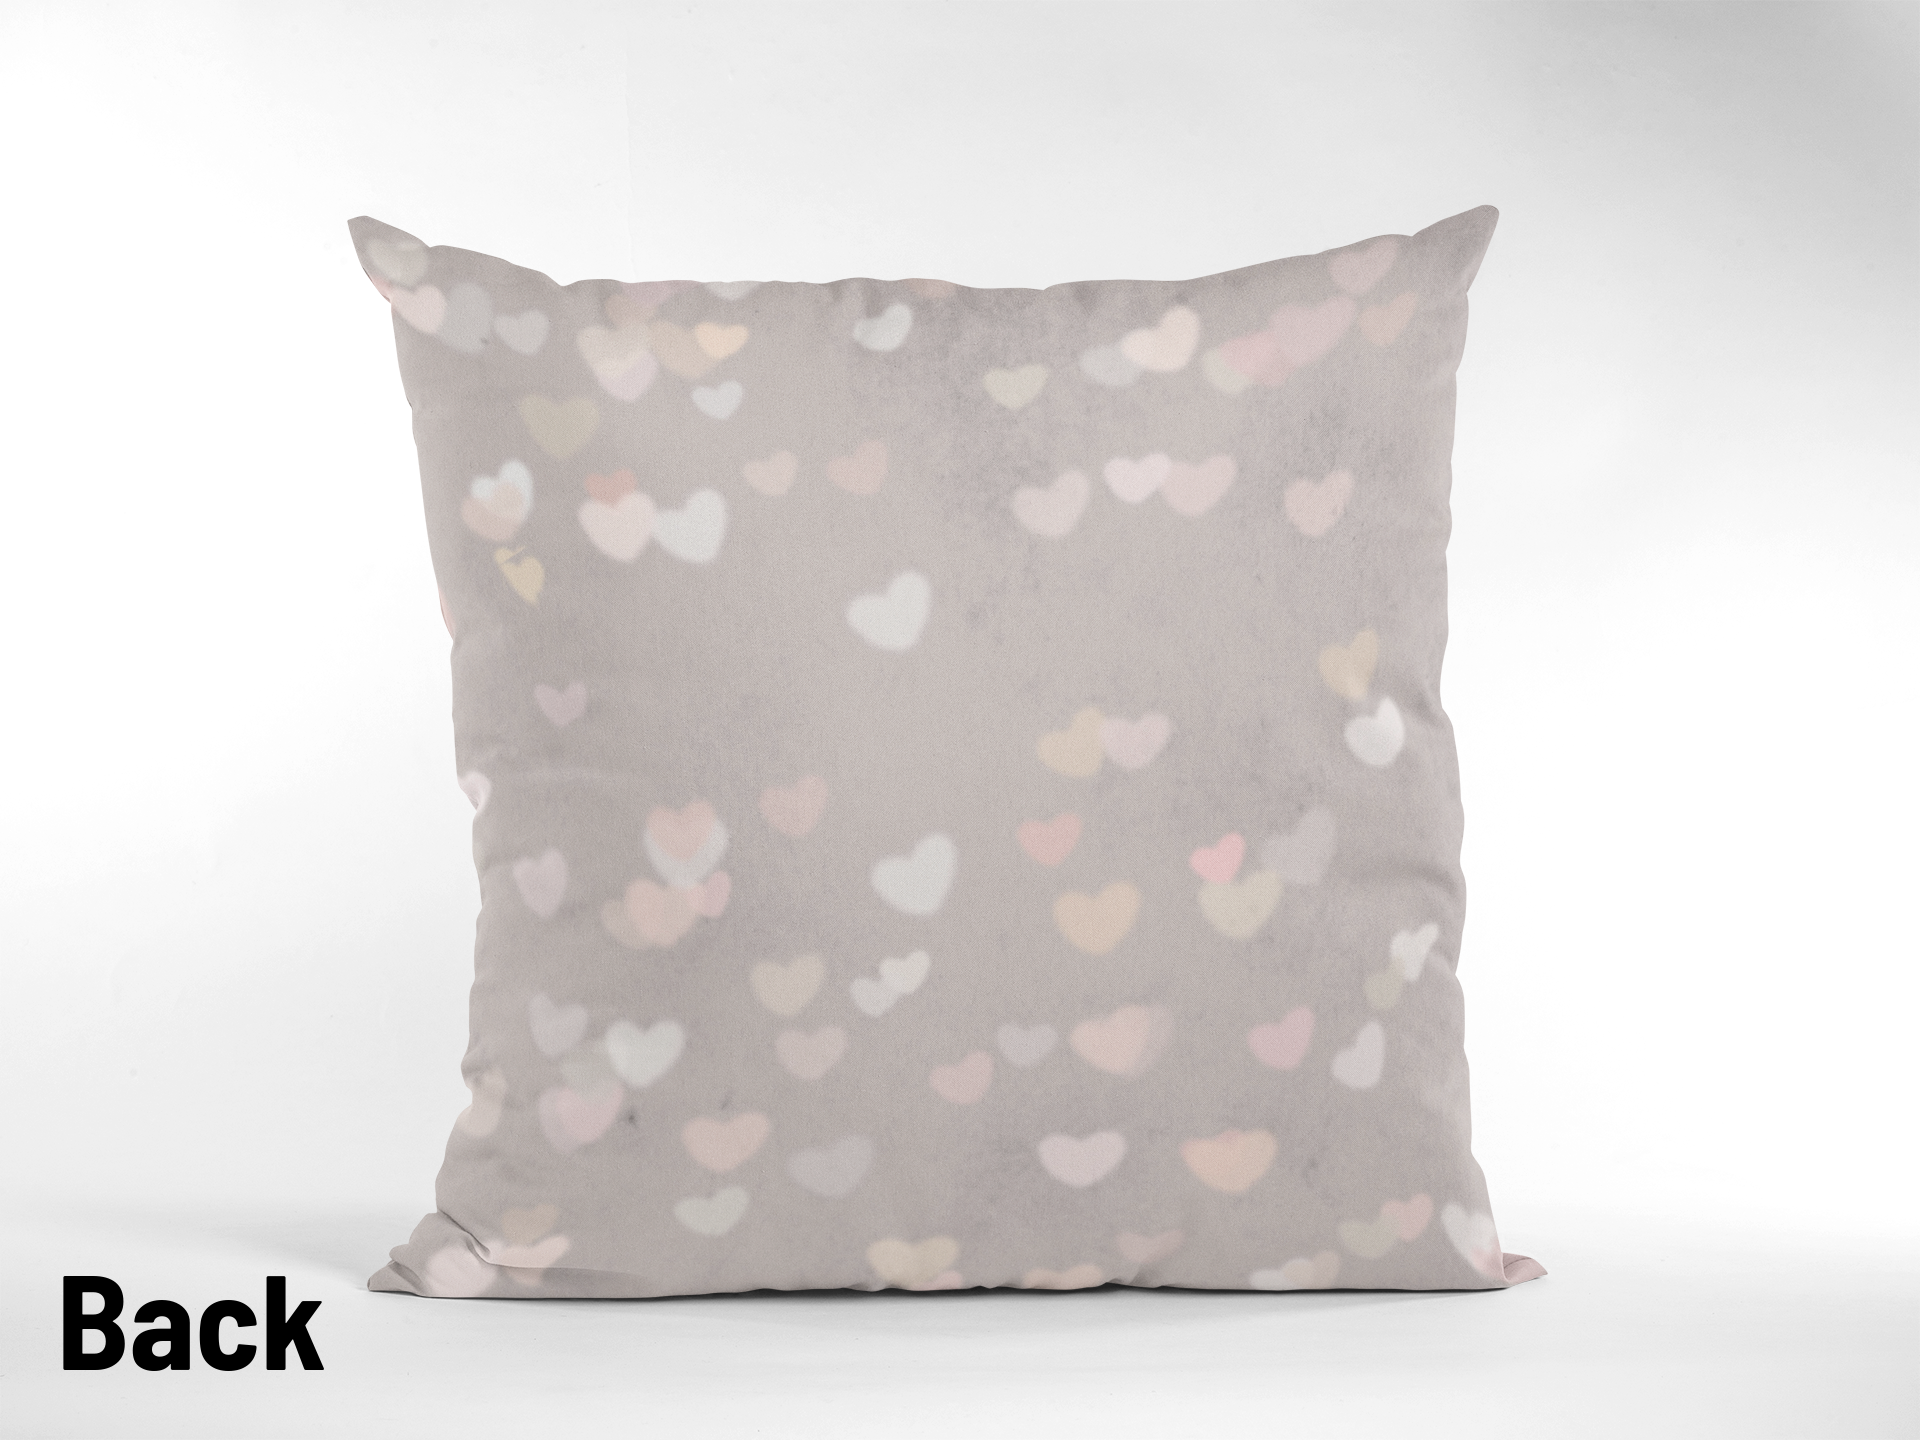 Girl Boss Hearts BOHO Decorative Pillow Cover